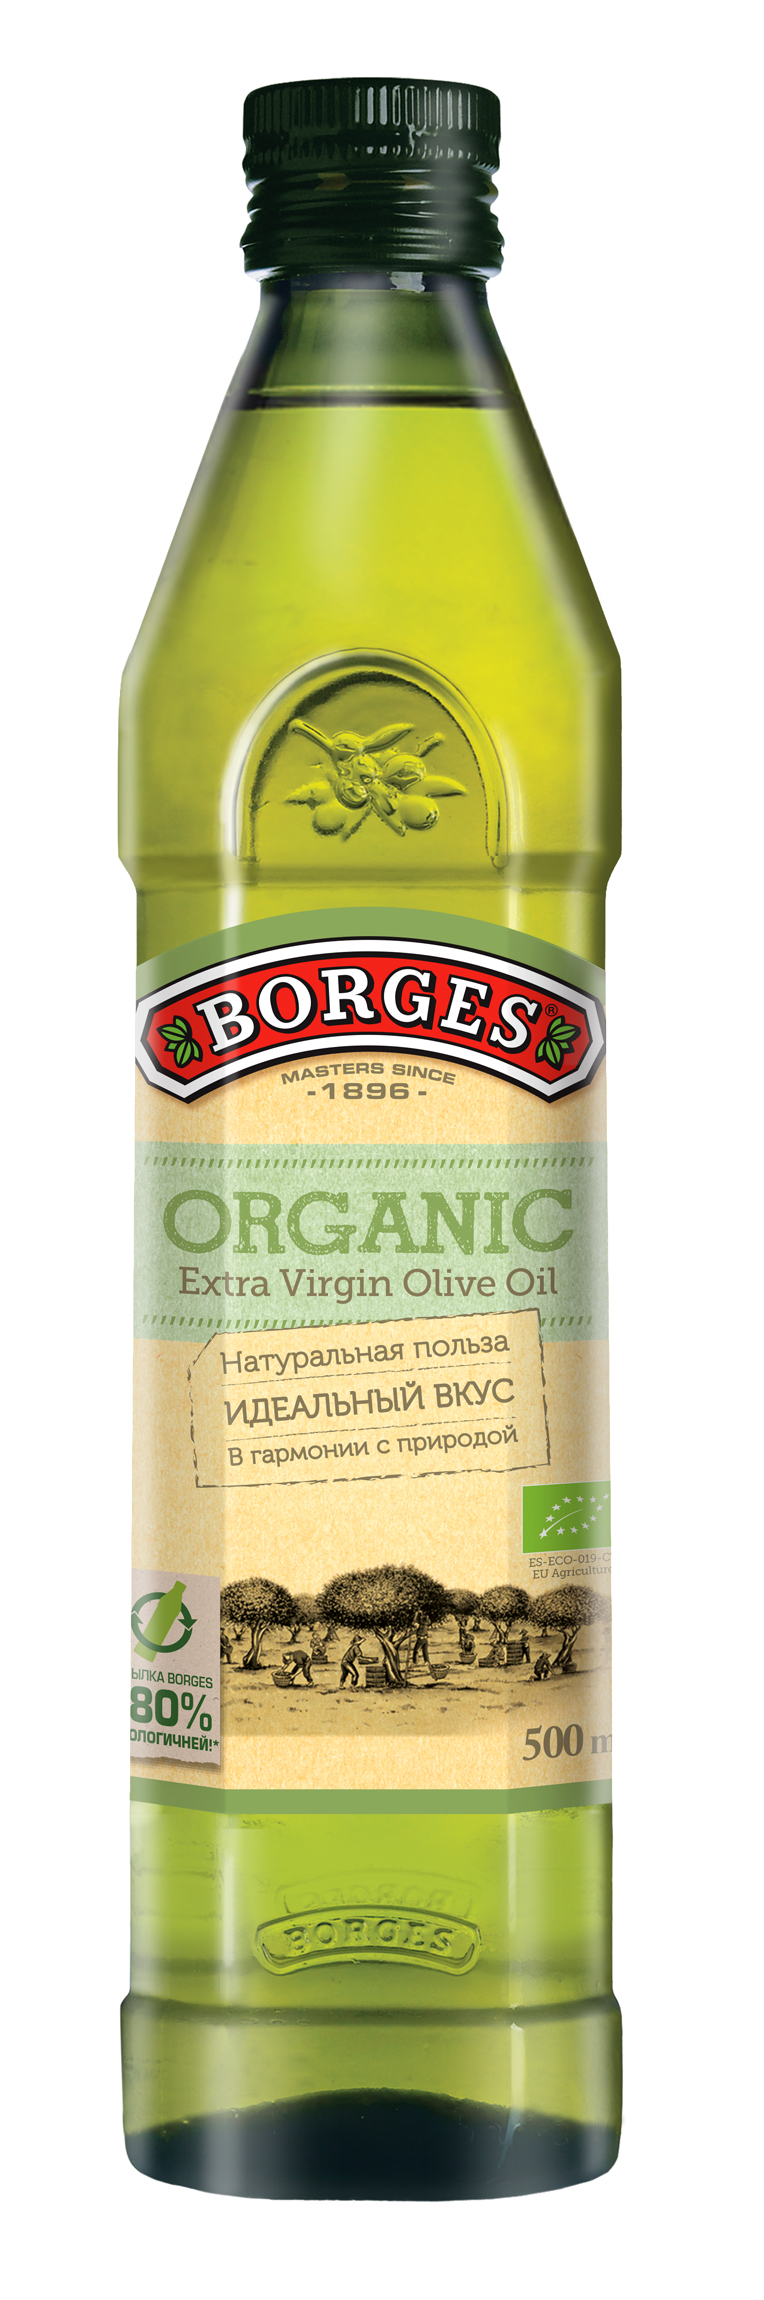 фото Оливковое масло borges organic 500 мл